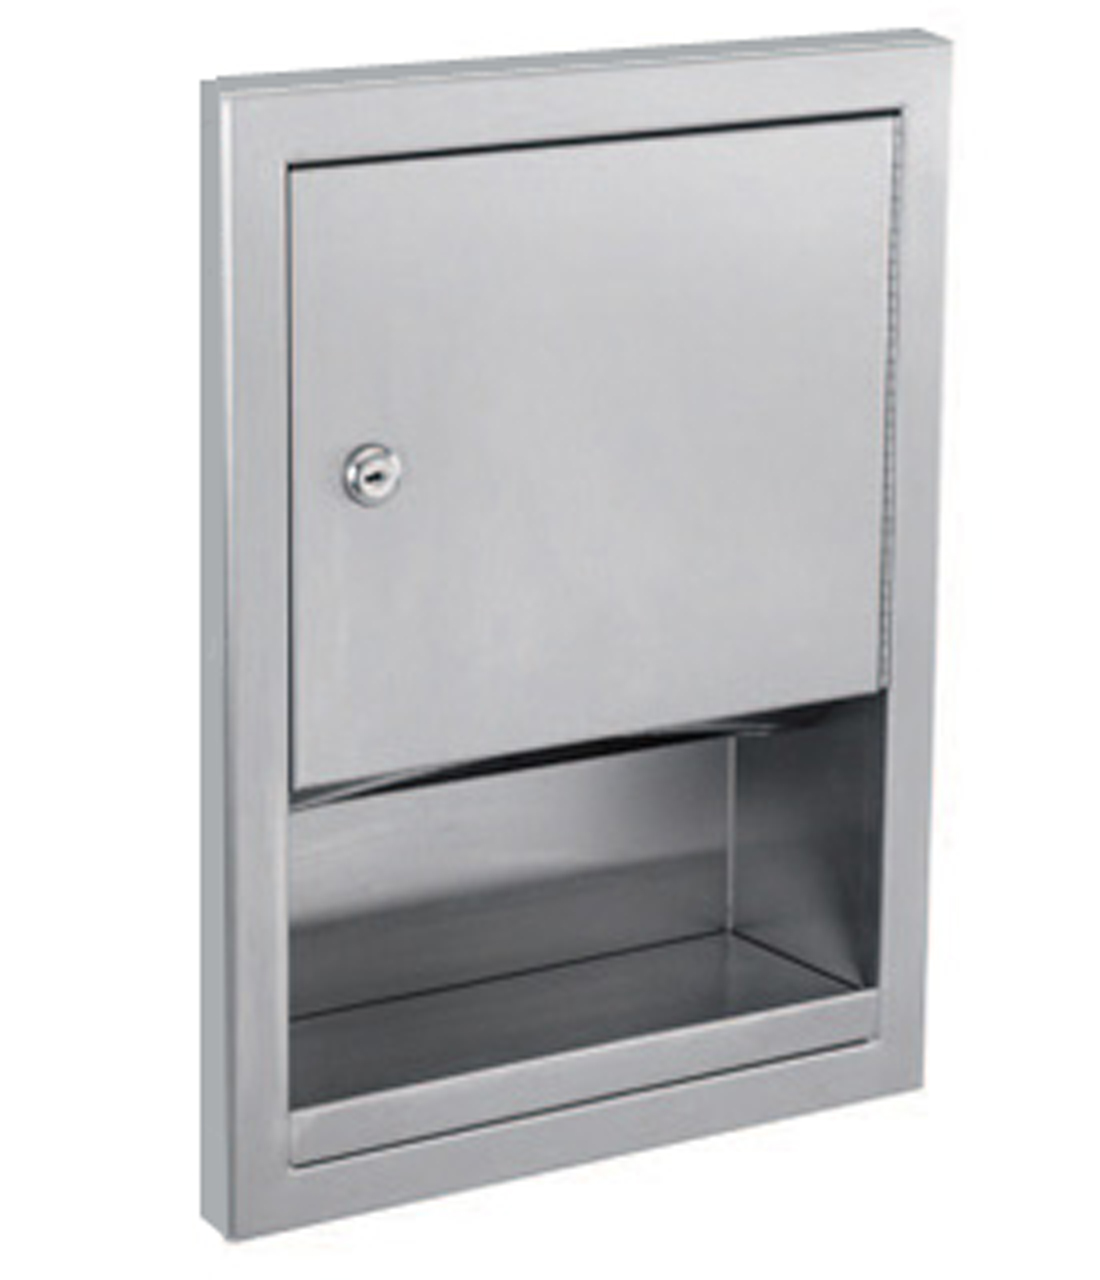 Semi-Recessed Towel Dispenser - (Model #: td-4f)-image